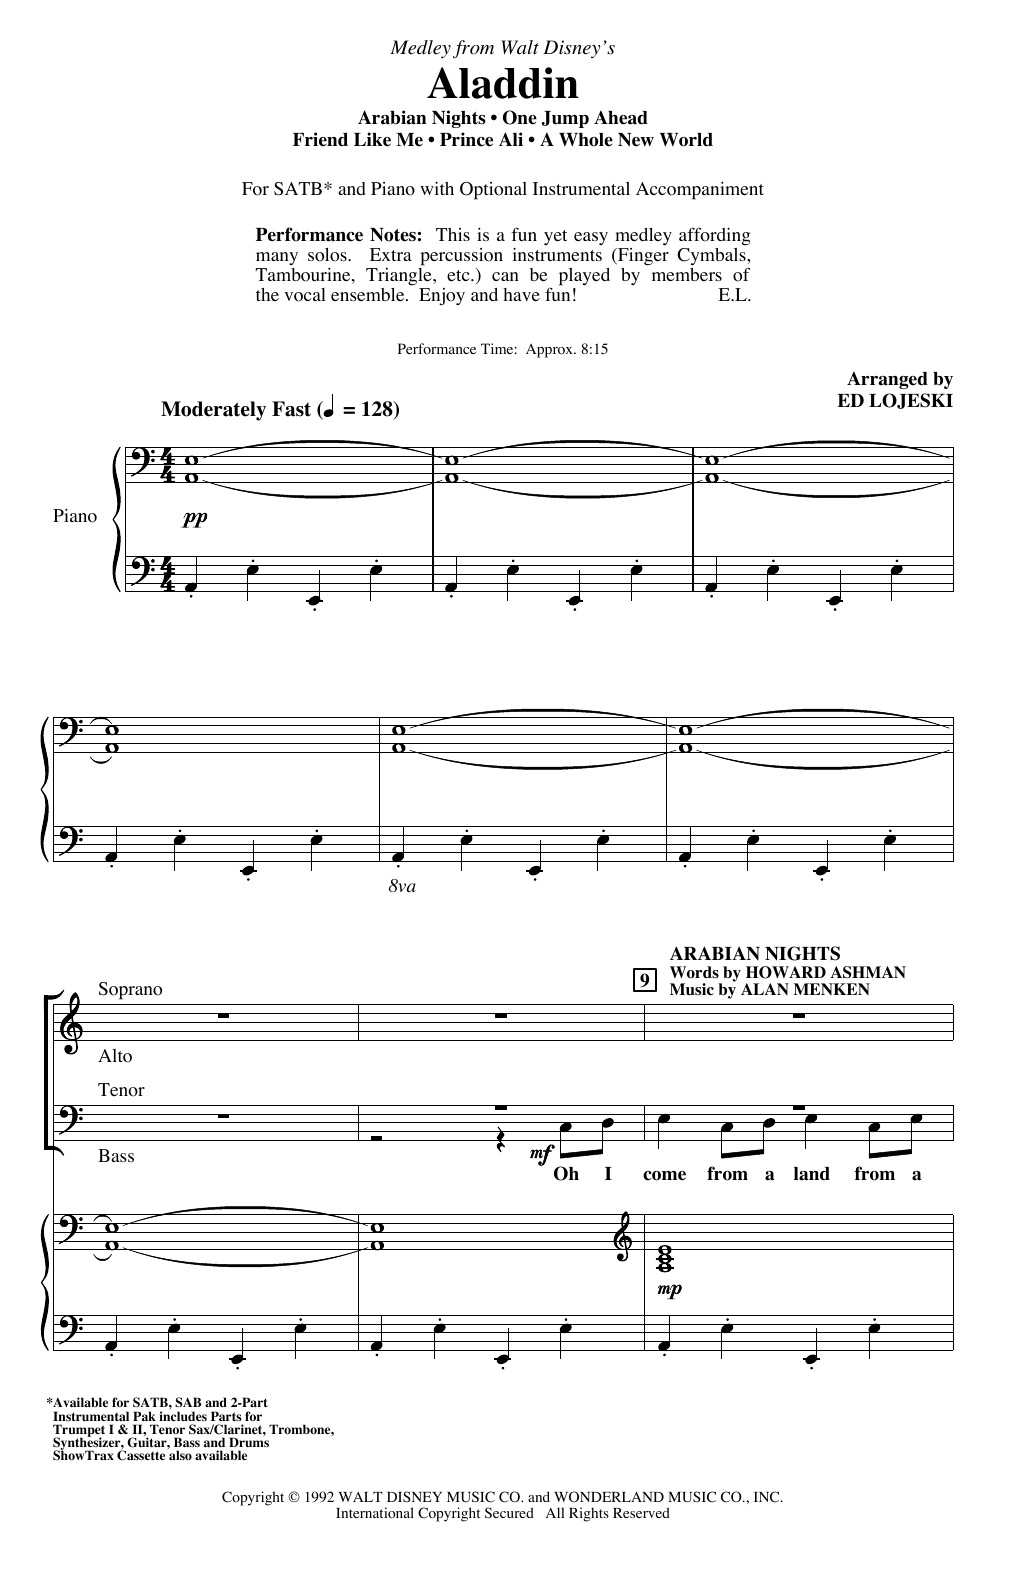 Alan Menken Aladdin (Medley) (from Disney's Aladdin) (arr. Ed Lojeski) Sheet Music Notes & Chords for 2-Part Choir - Download or Print PDF